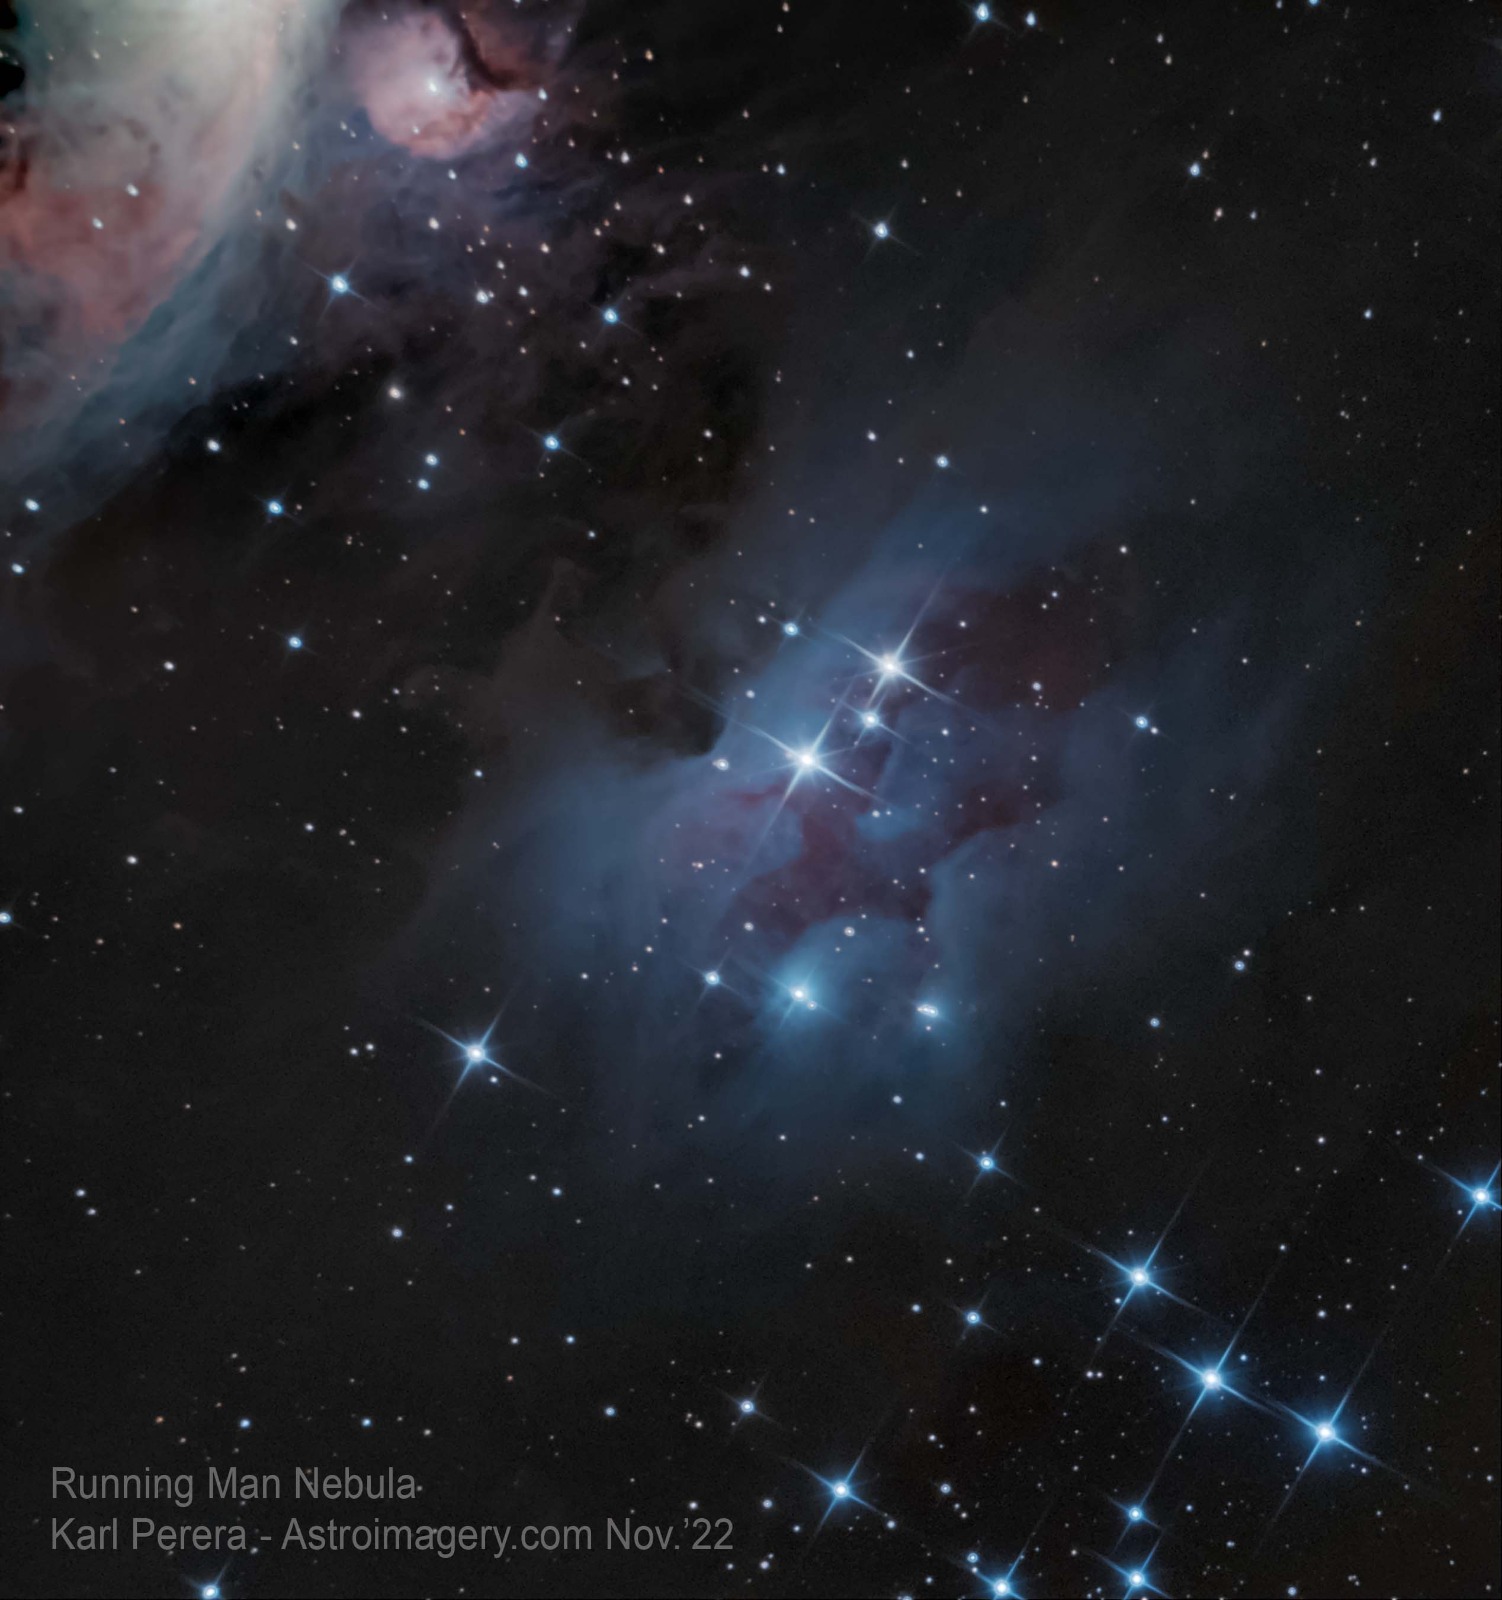 image of the Running Man Nebula, Orion.